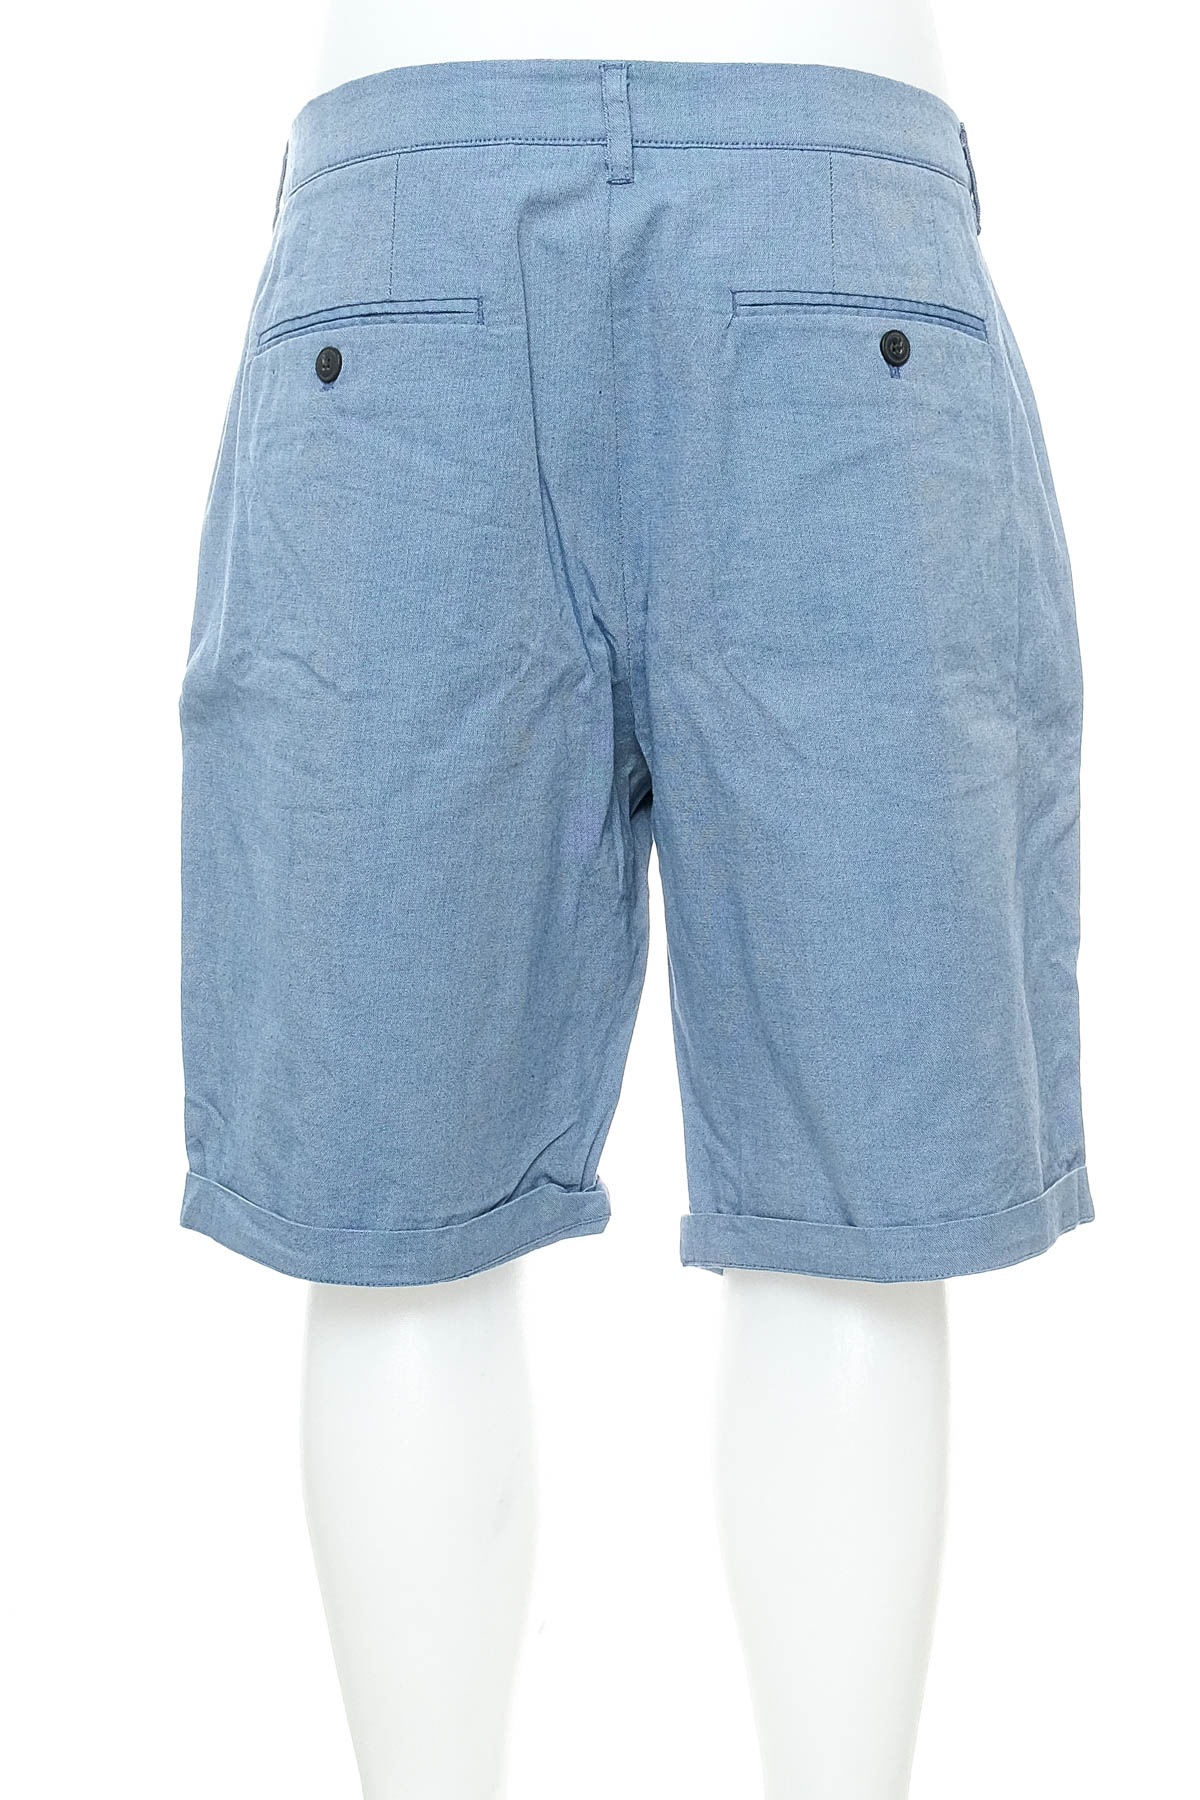 Men's shorts - CONNOR - 1